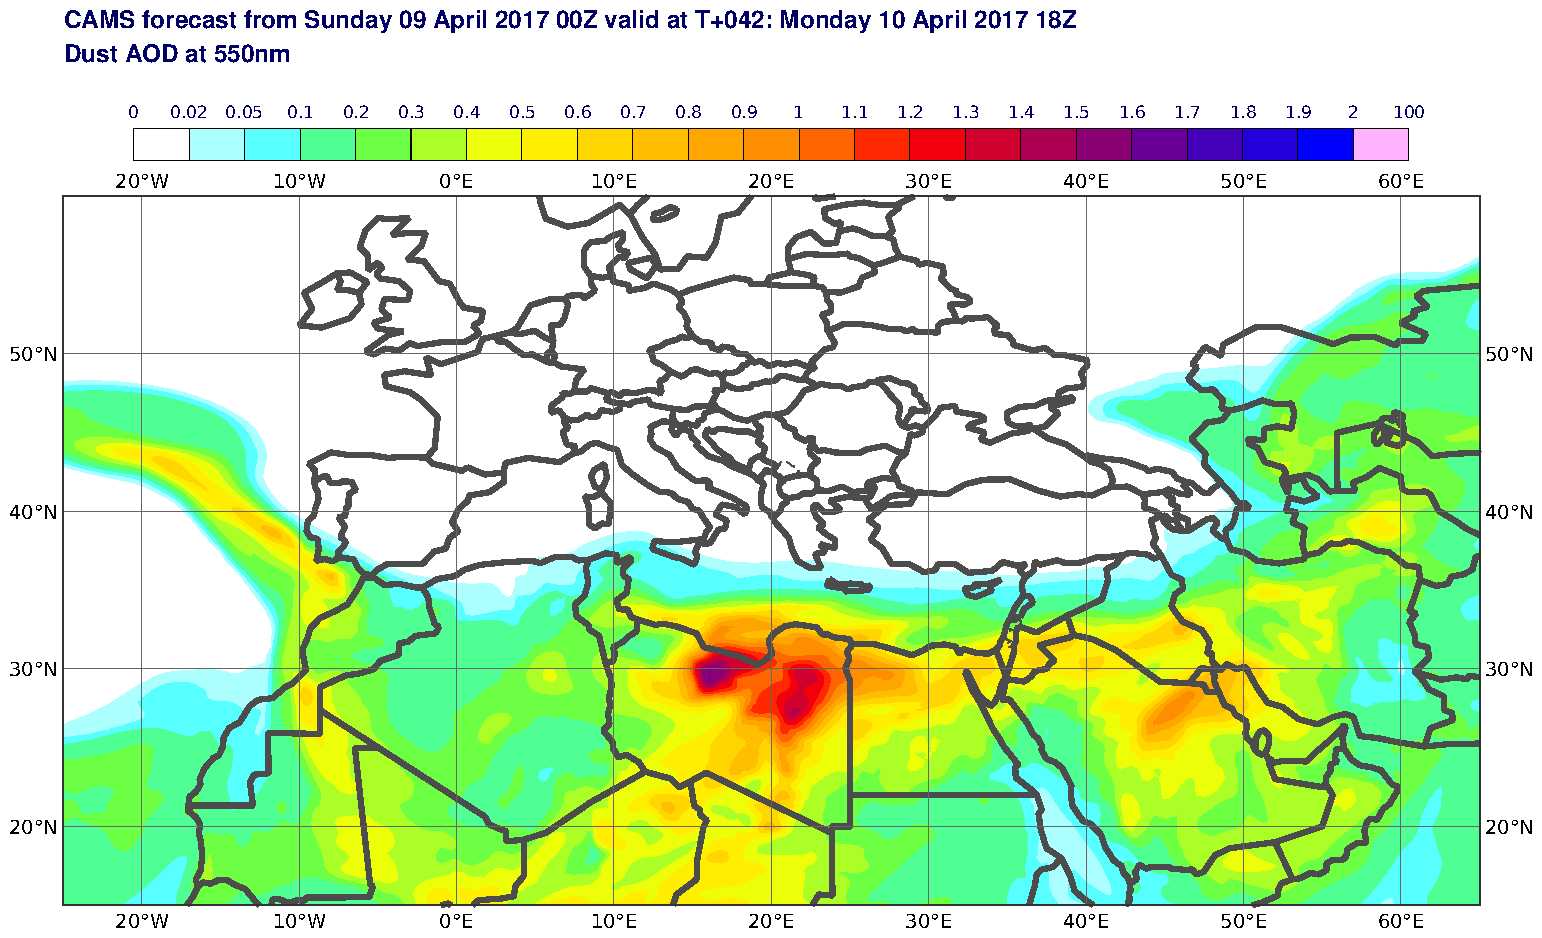 Dust AOD at 550nm valid at T42 - 2017-04-10 18:00